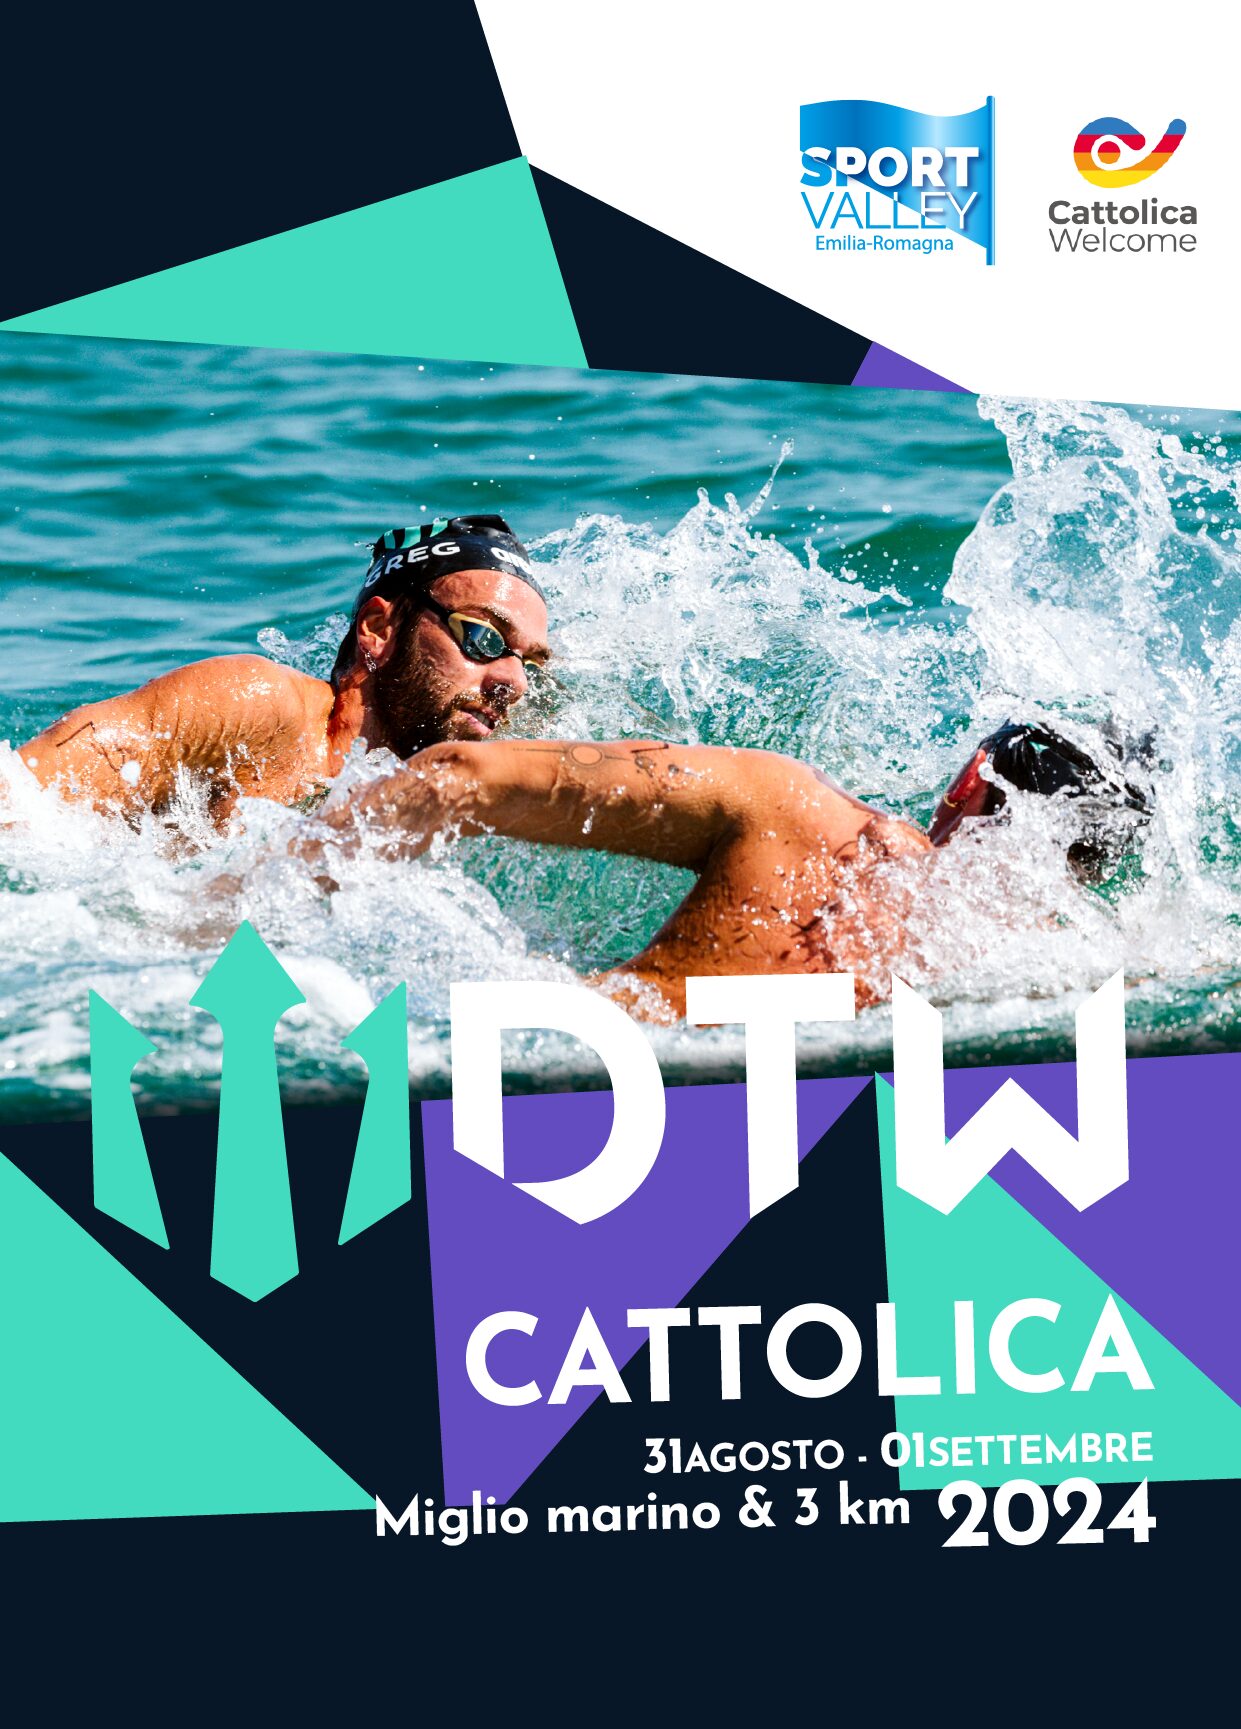 DTW Cattolica 2024 - Bollettino info